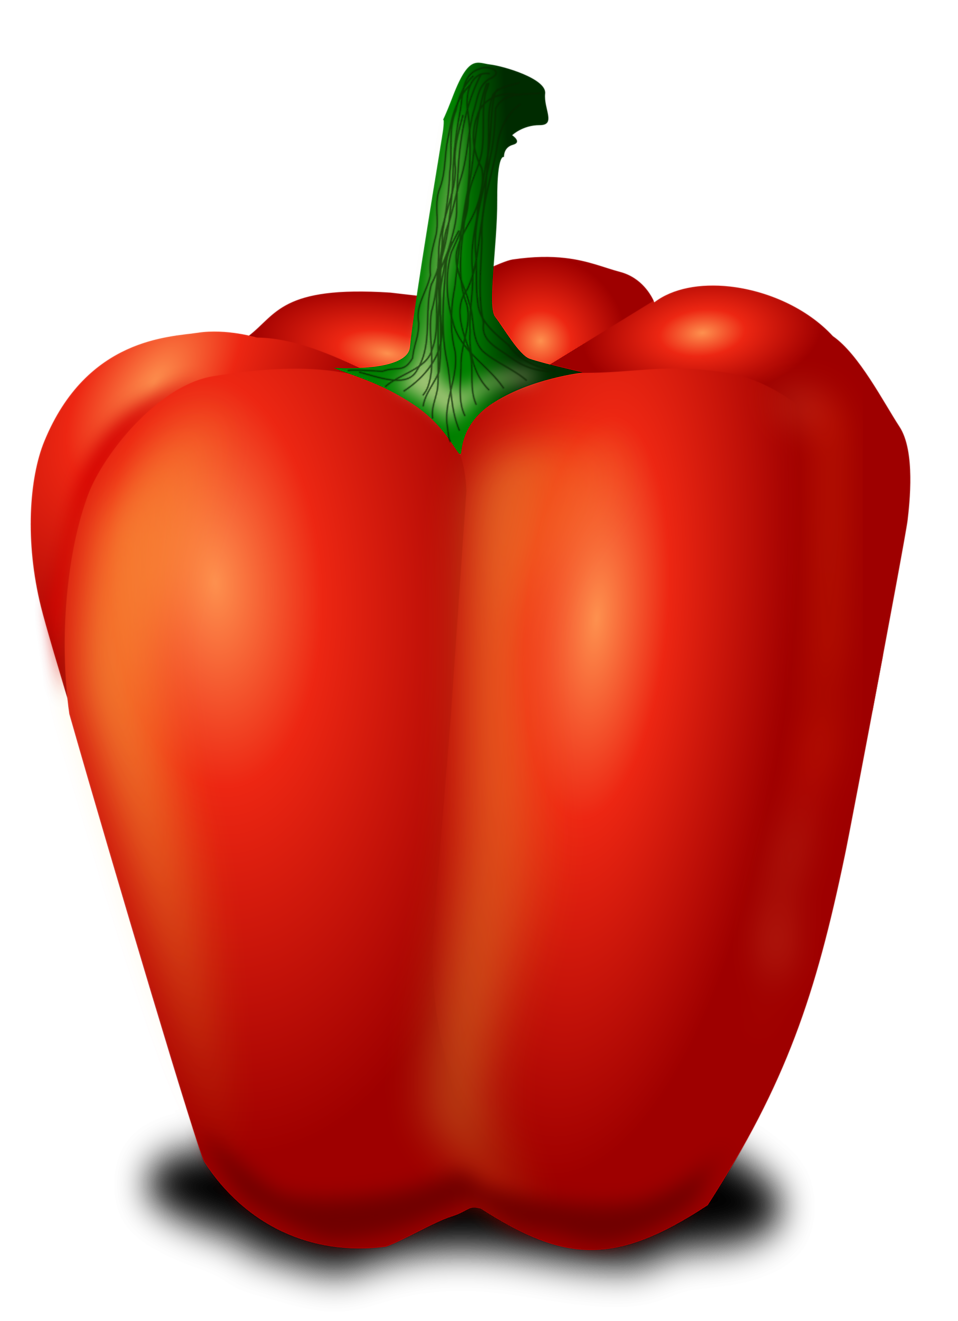 Free stock photo illustration. Pepper clipart chili pepper